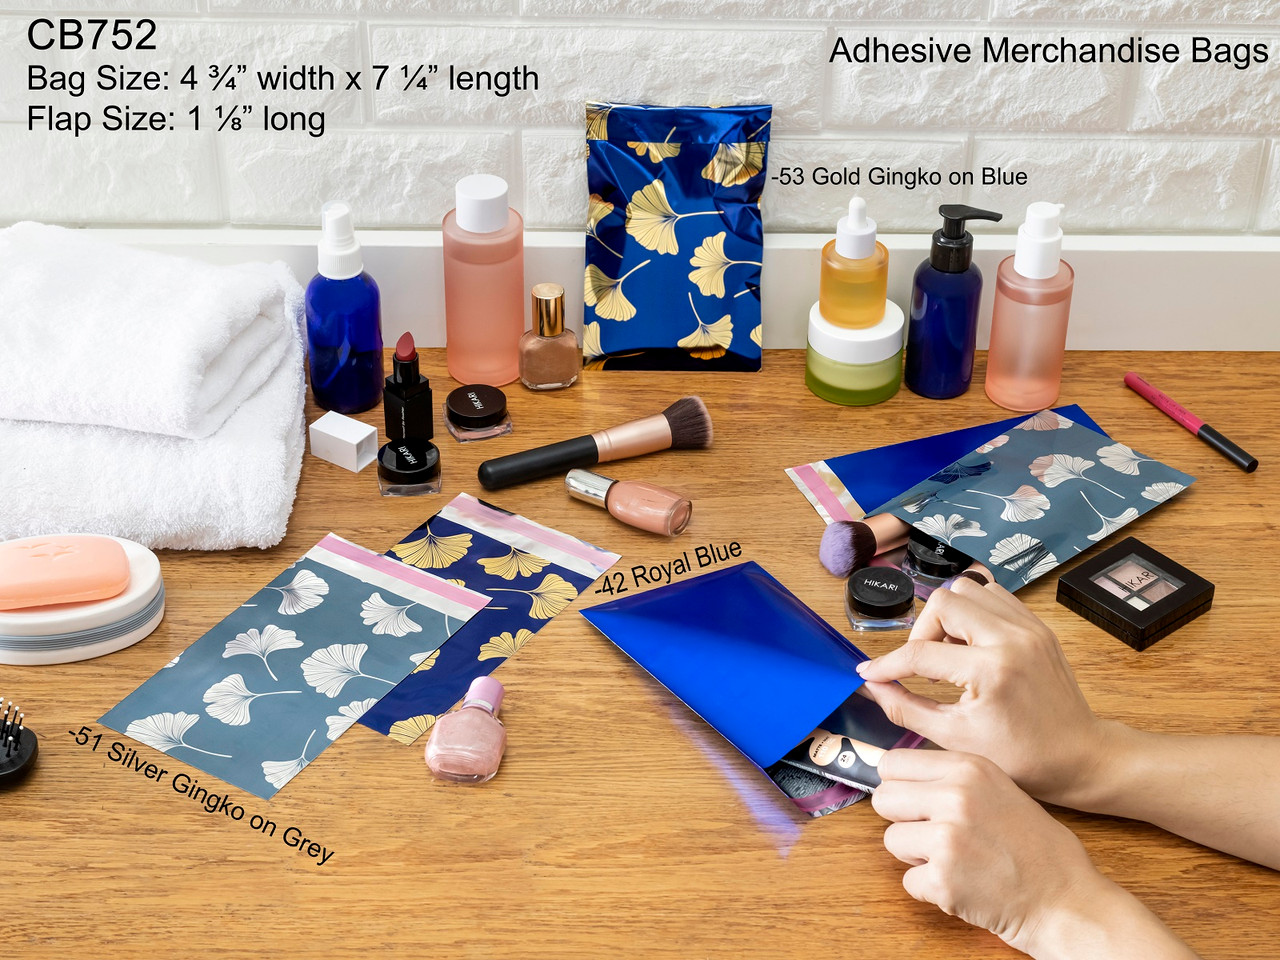 Adhesive Merchandise Bags 4 3/4" x 7 1/4" Royal Blue 